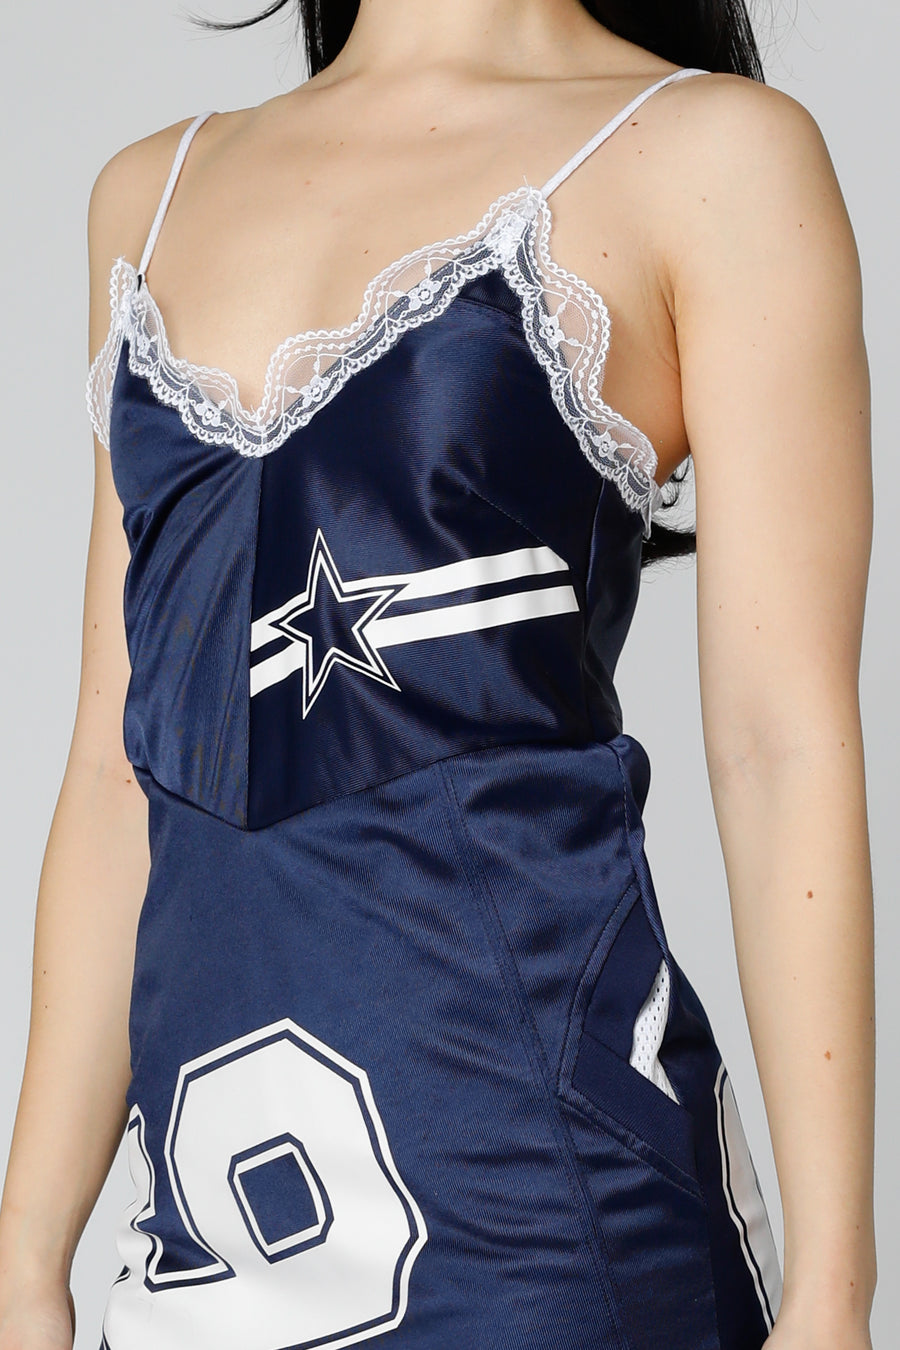 Rework NFL Lace Dress - XS